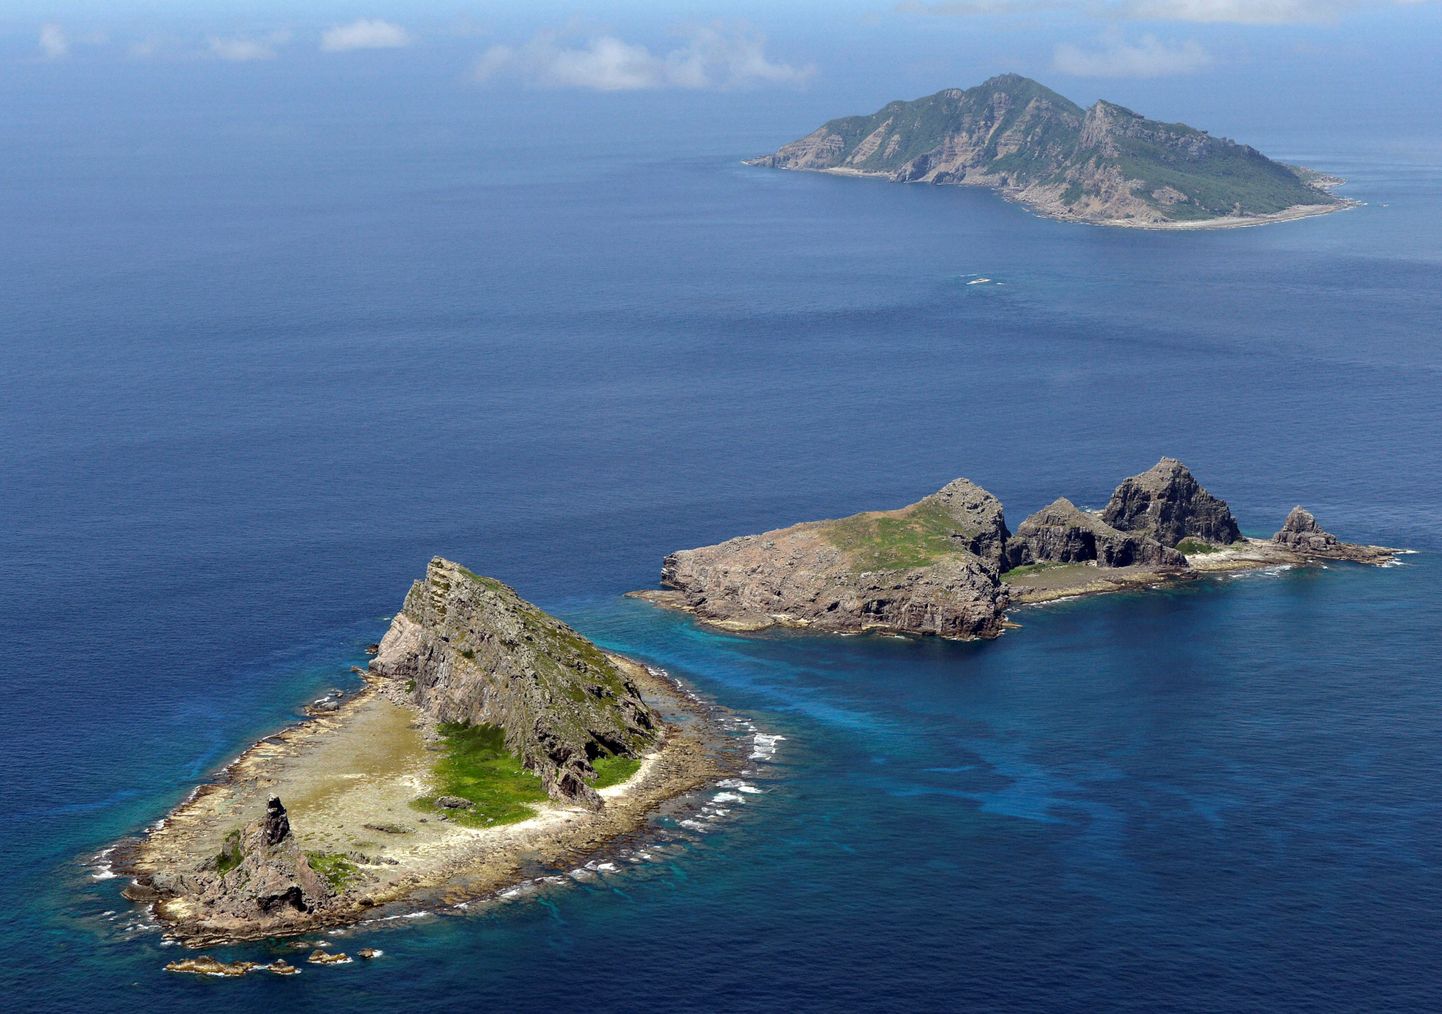 Diaoyu saared.